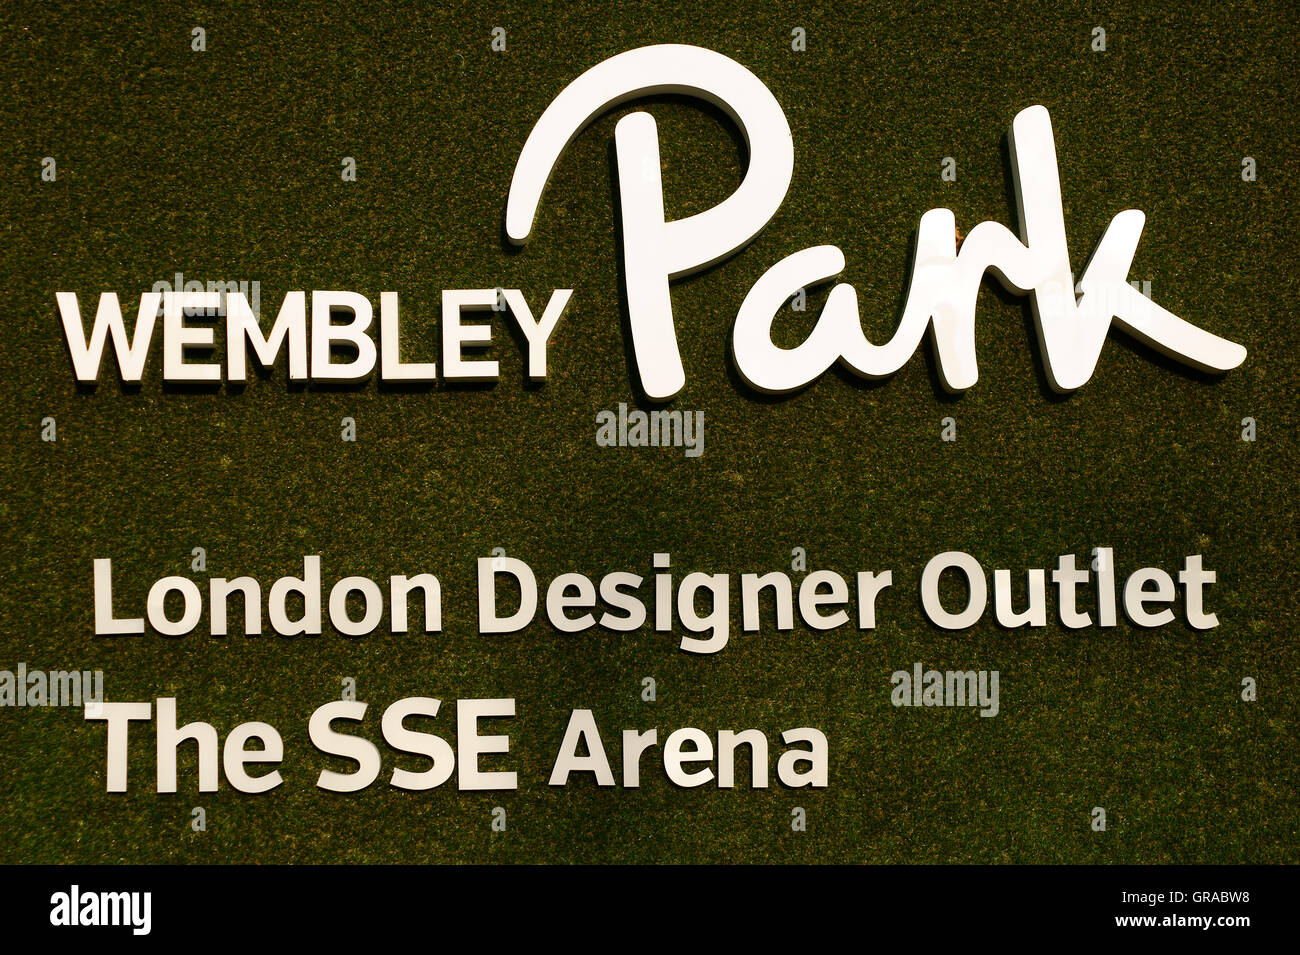 Wembley Park Stockfoto